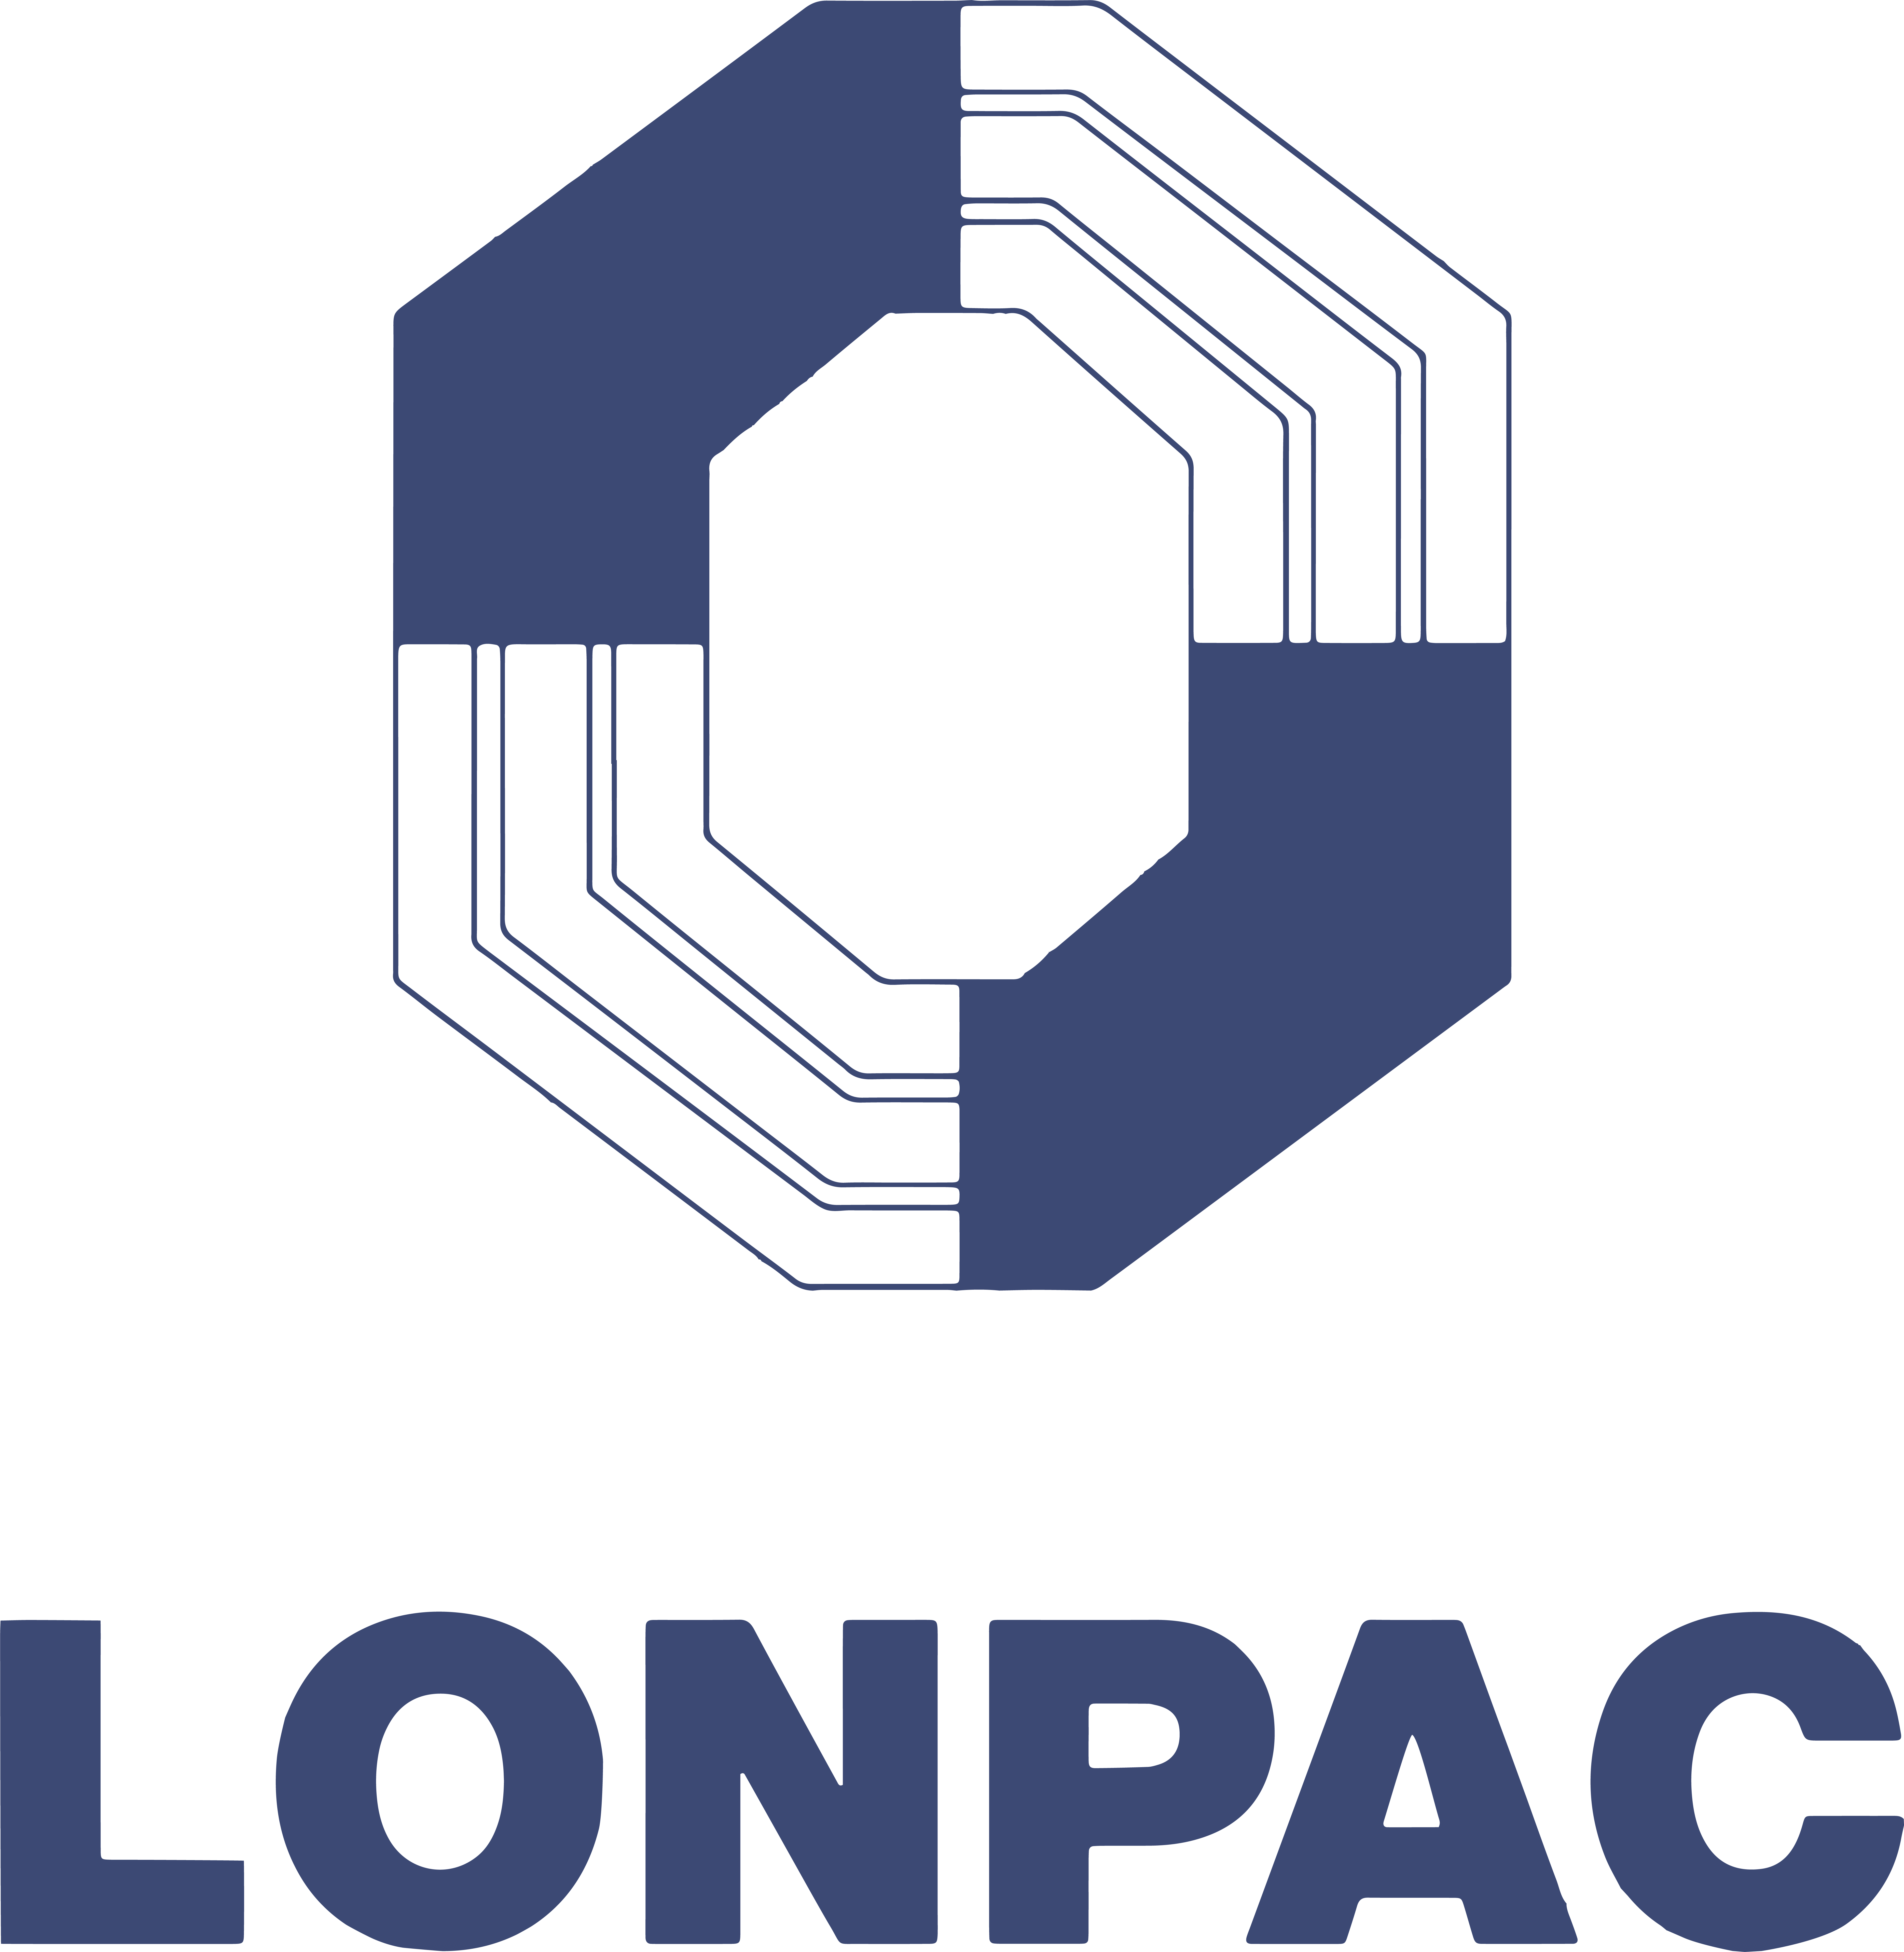 Lonpac Insurance Berhad